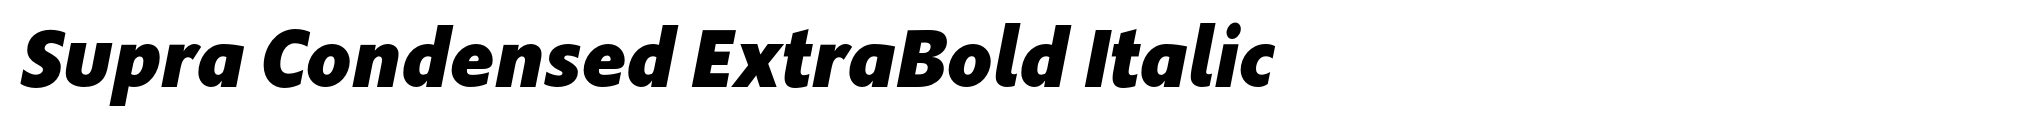 Supra Condensed ExtraBold Italic image